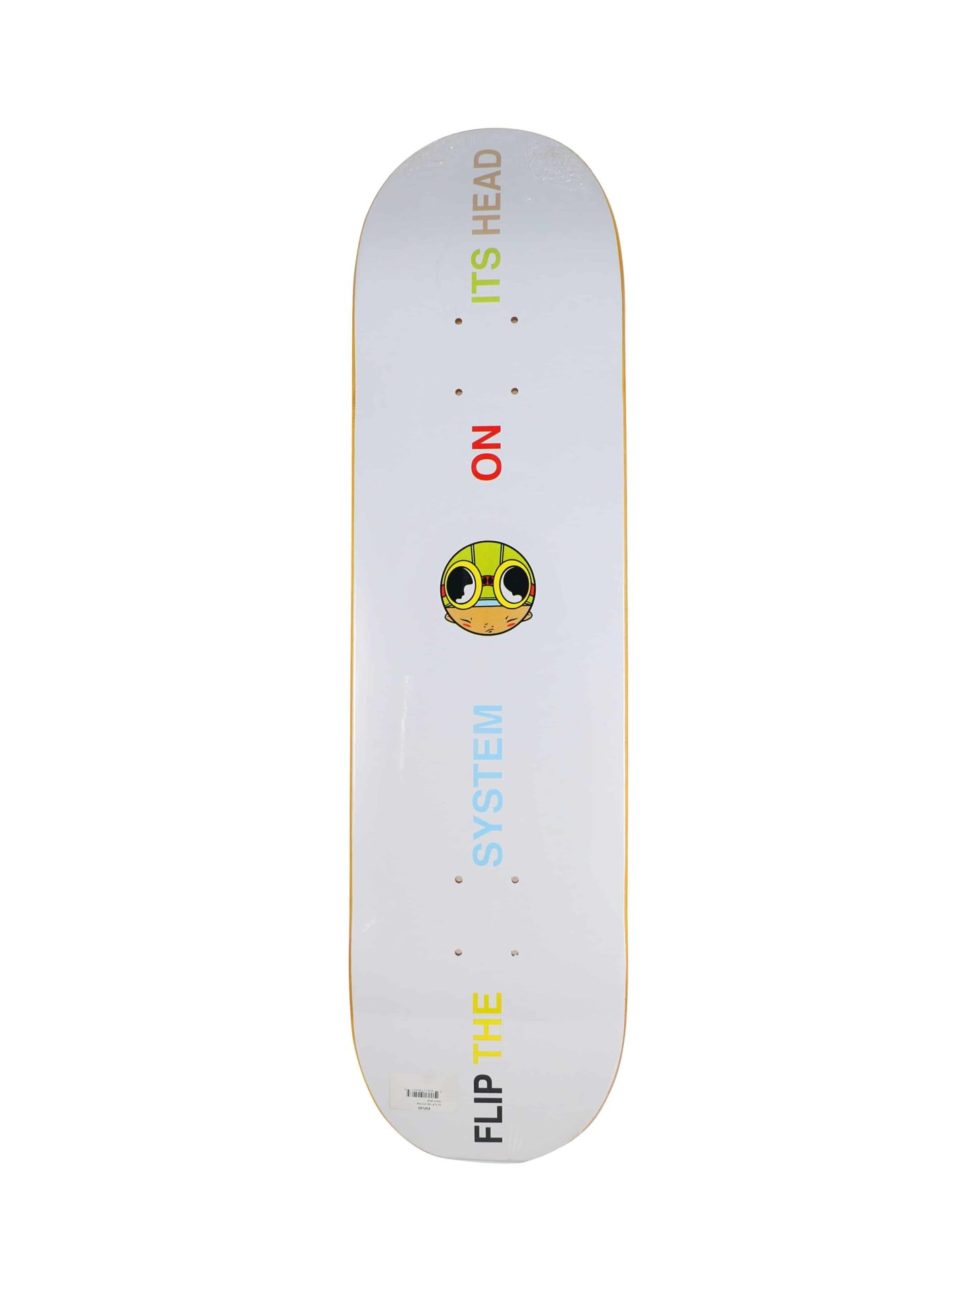 5209a Hebru Brantley Skateboard Deck Baer & Bosch Toy Auctions